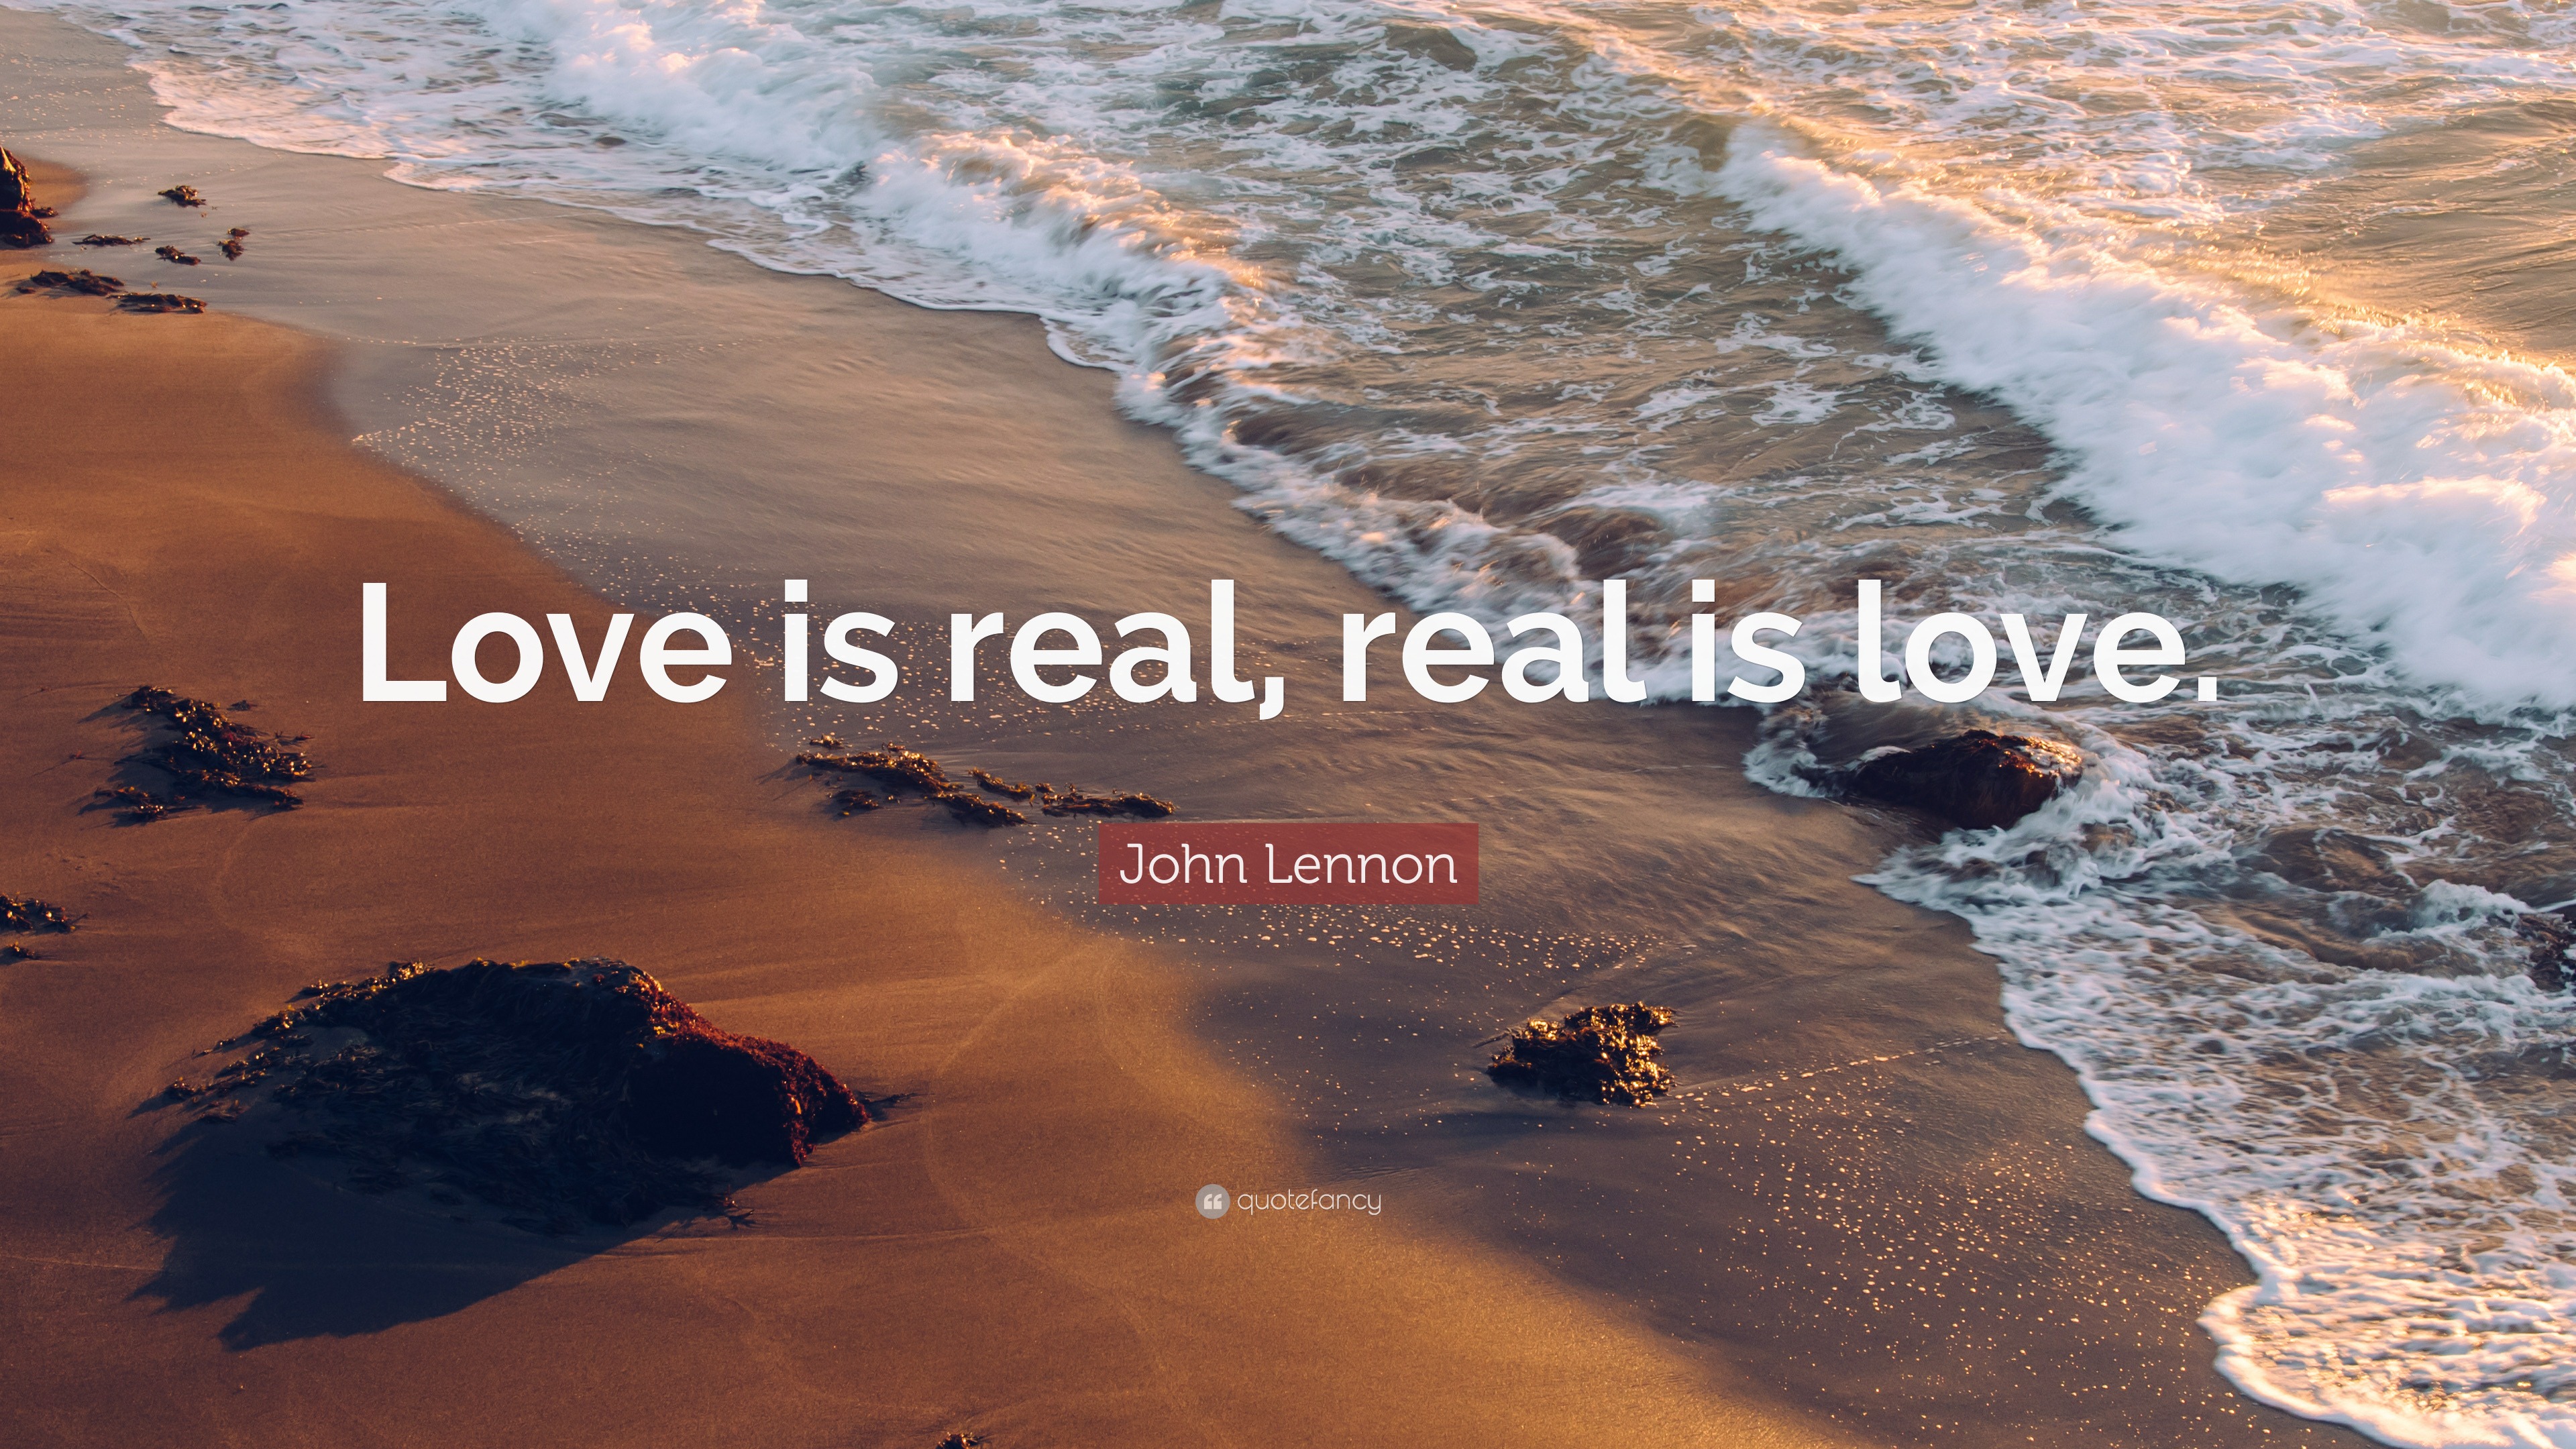 https://quotefancy.com/media/wallpaper/3840x2160/4749792-John-Lennon-Quote-Love-is-real-real-is-love.jpg